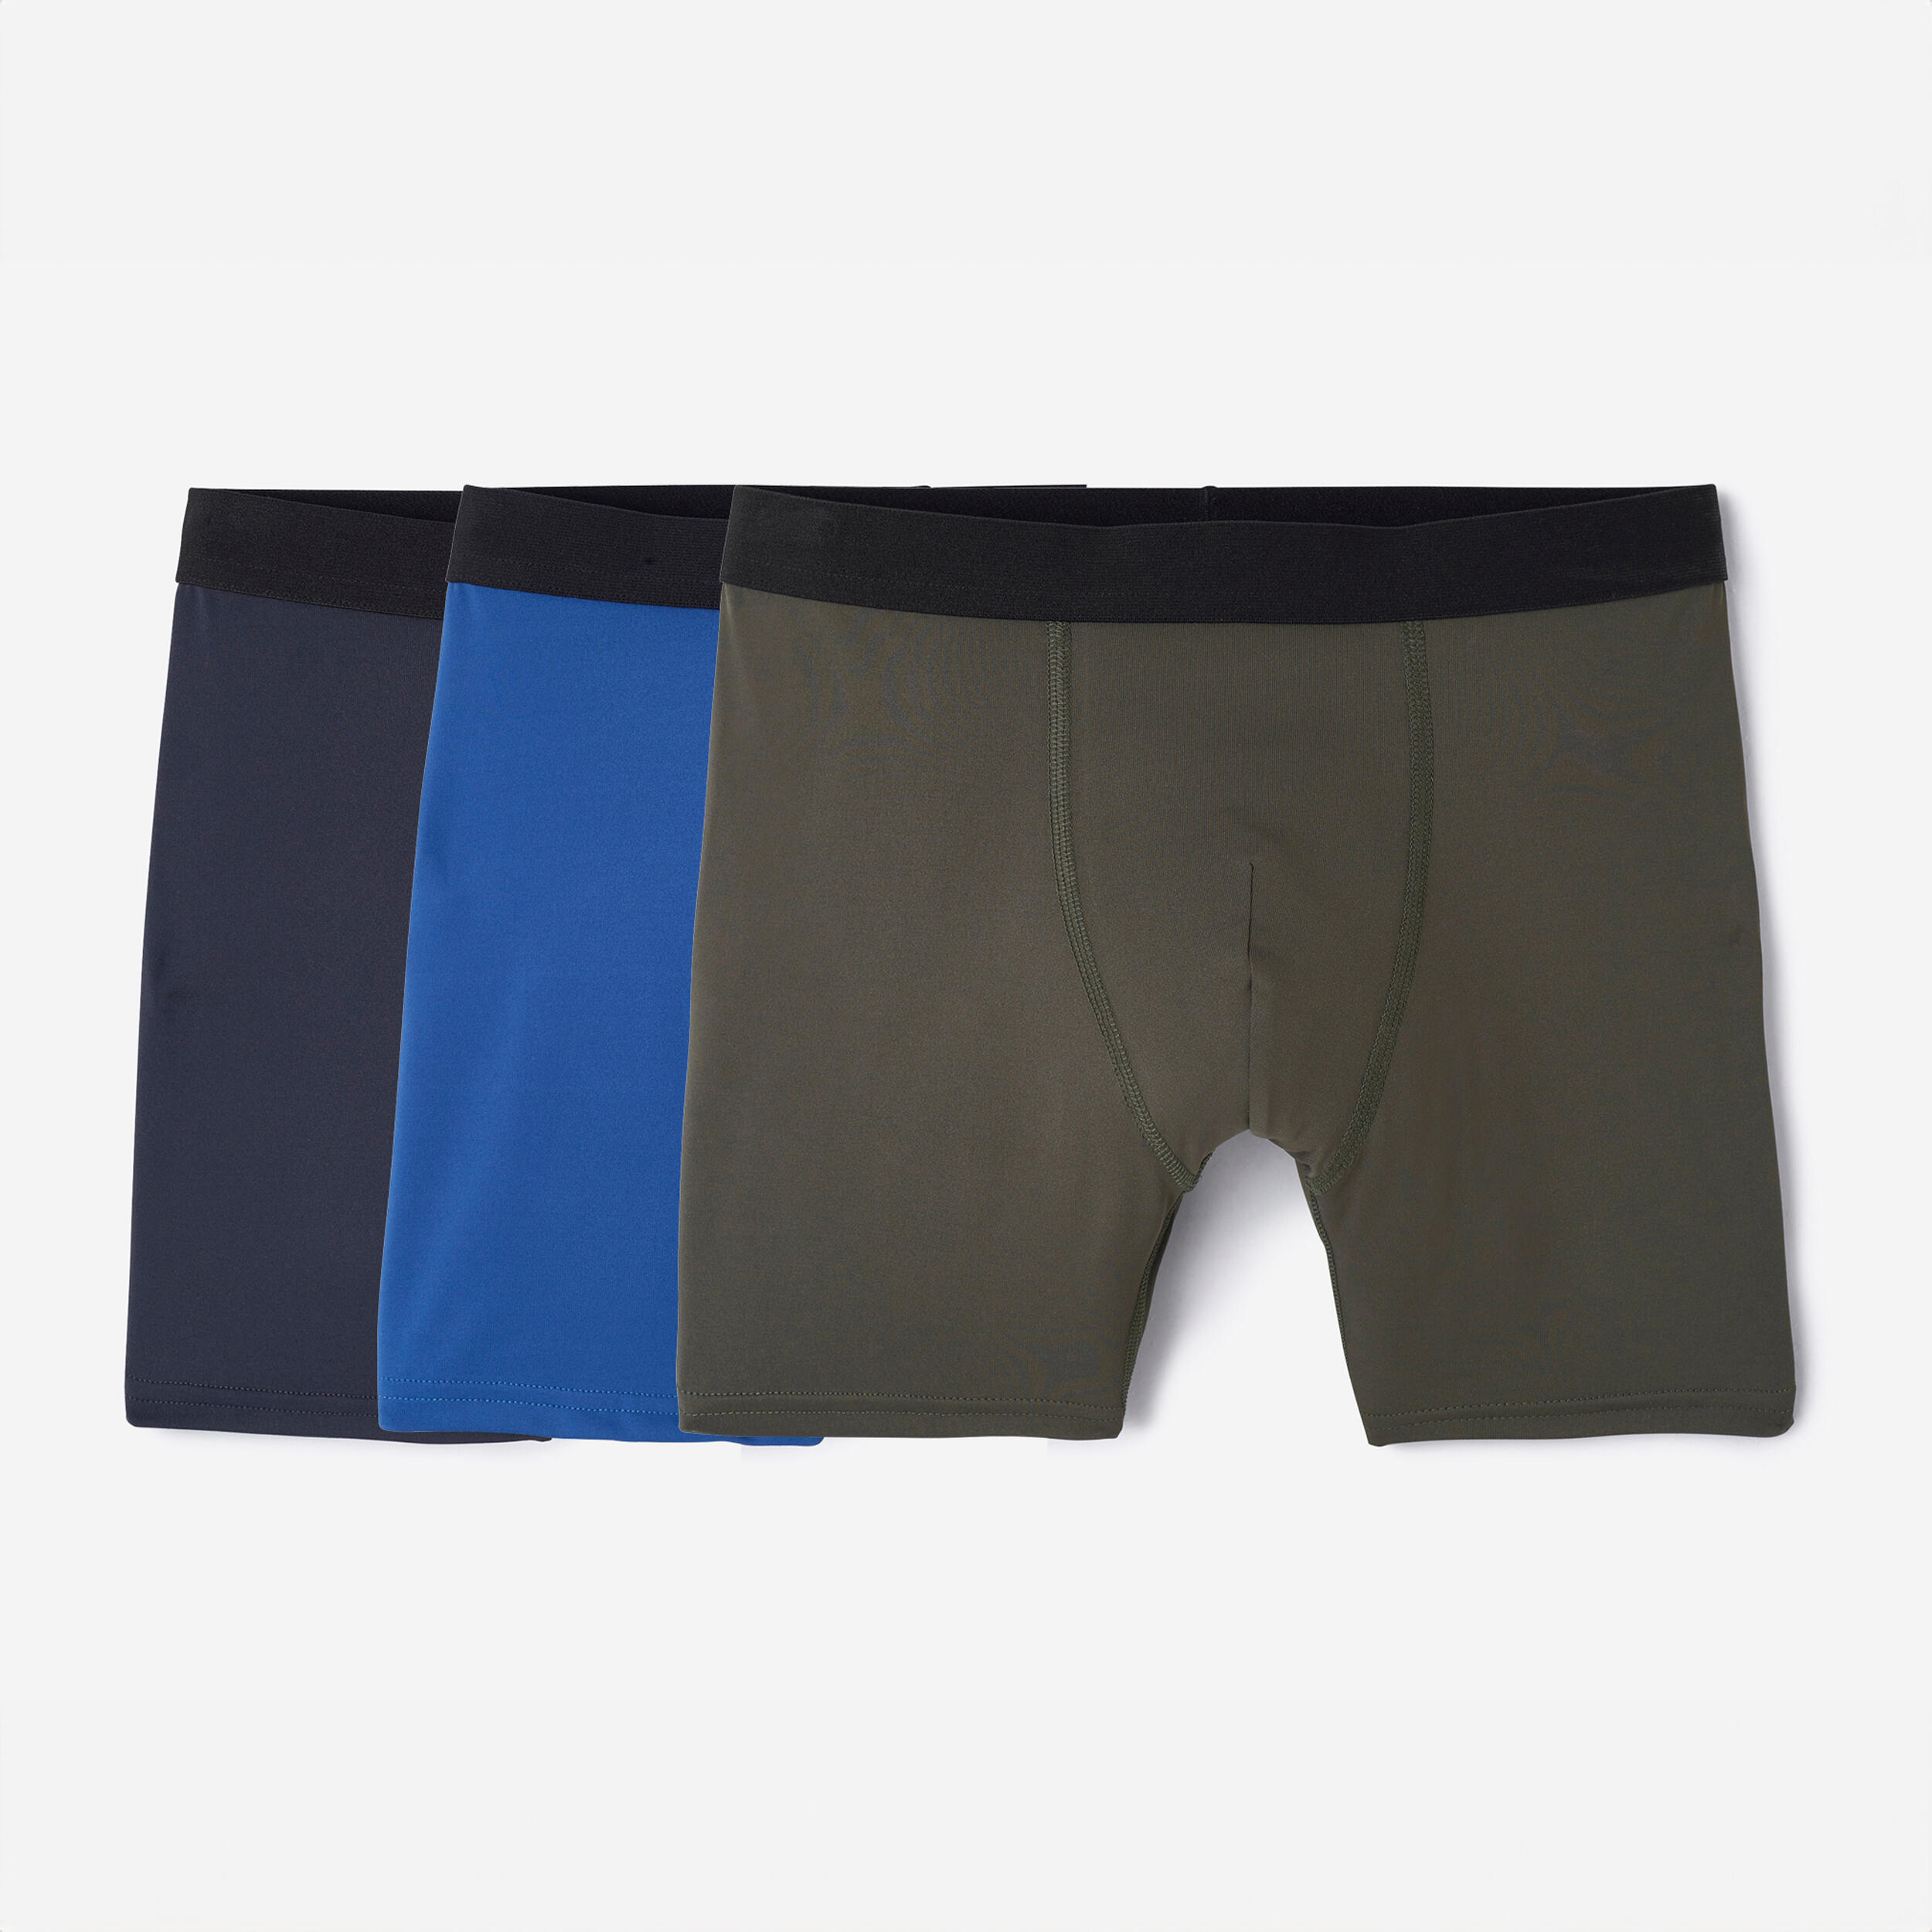 DECATHLON Men's Breathable Microfibre Boxers Tri-Pack - Dark Blue/Blue/Khaki